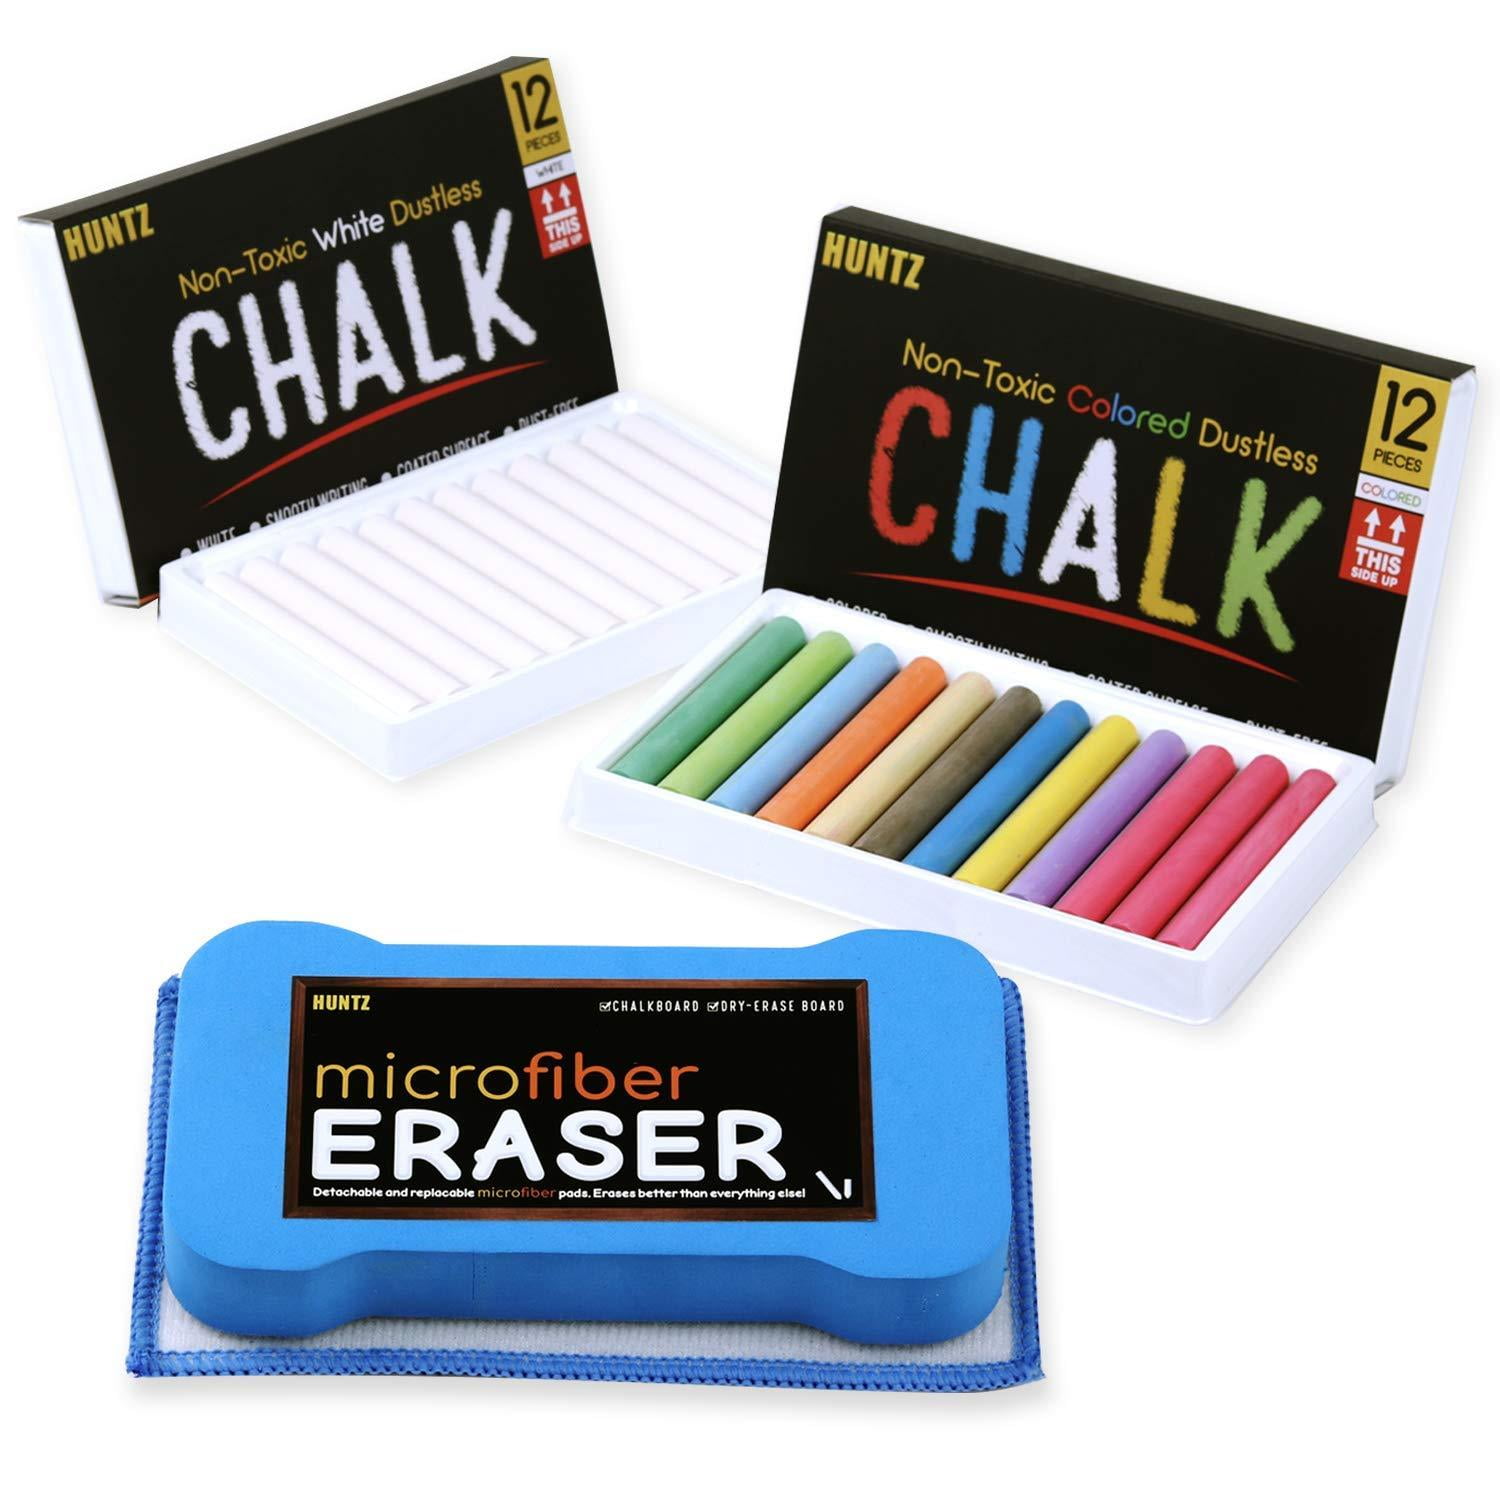 and Colored Dustless Chalk Bundle Huntz Non-Toxic White Dustless Chalk 12 ct box 12 ct box